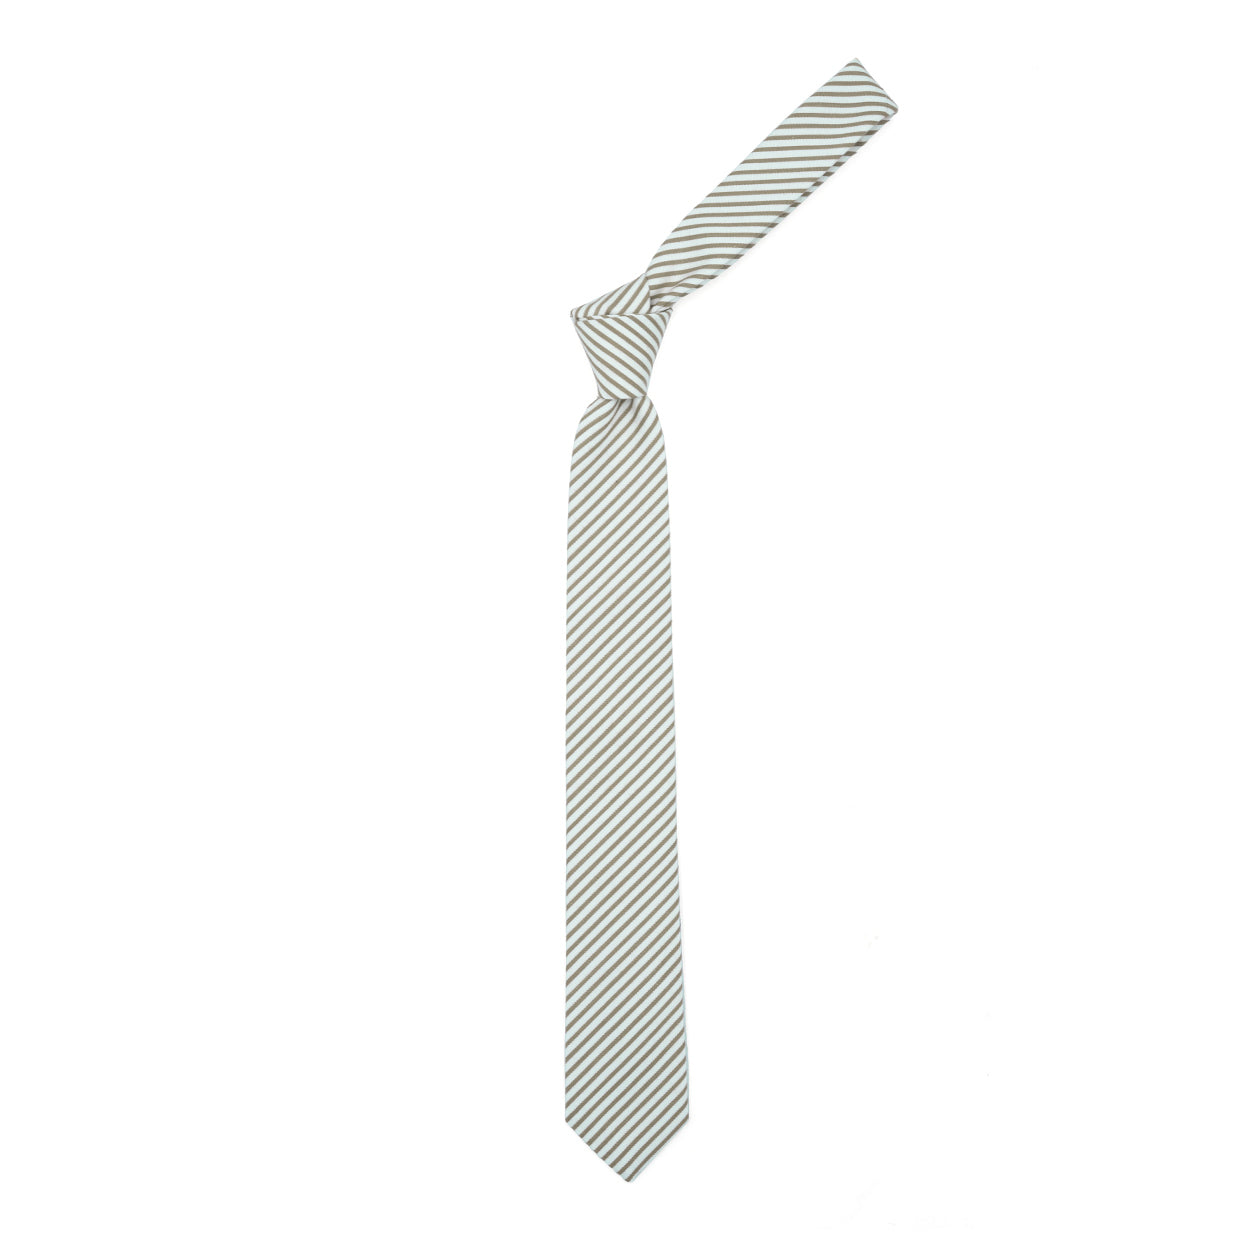 Cream tie with beige stripes